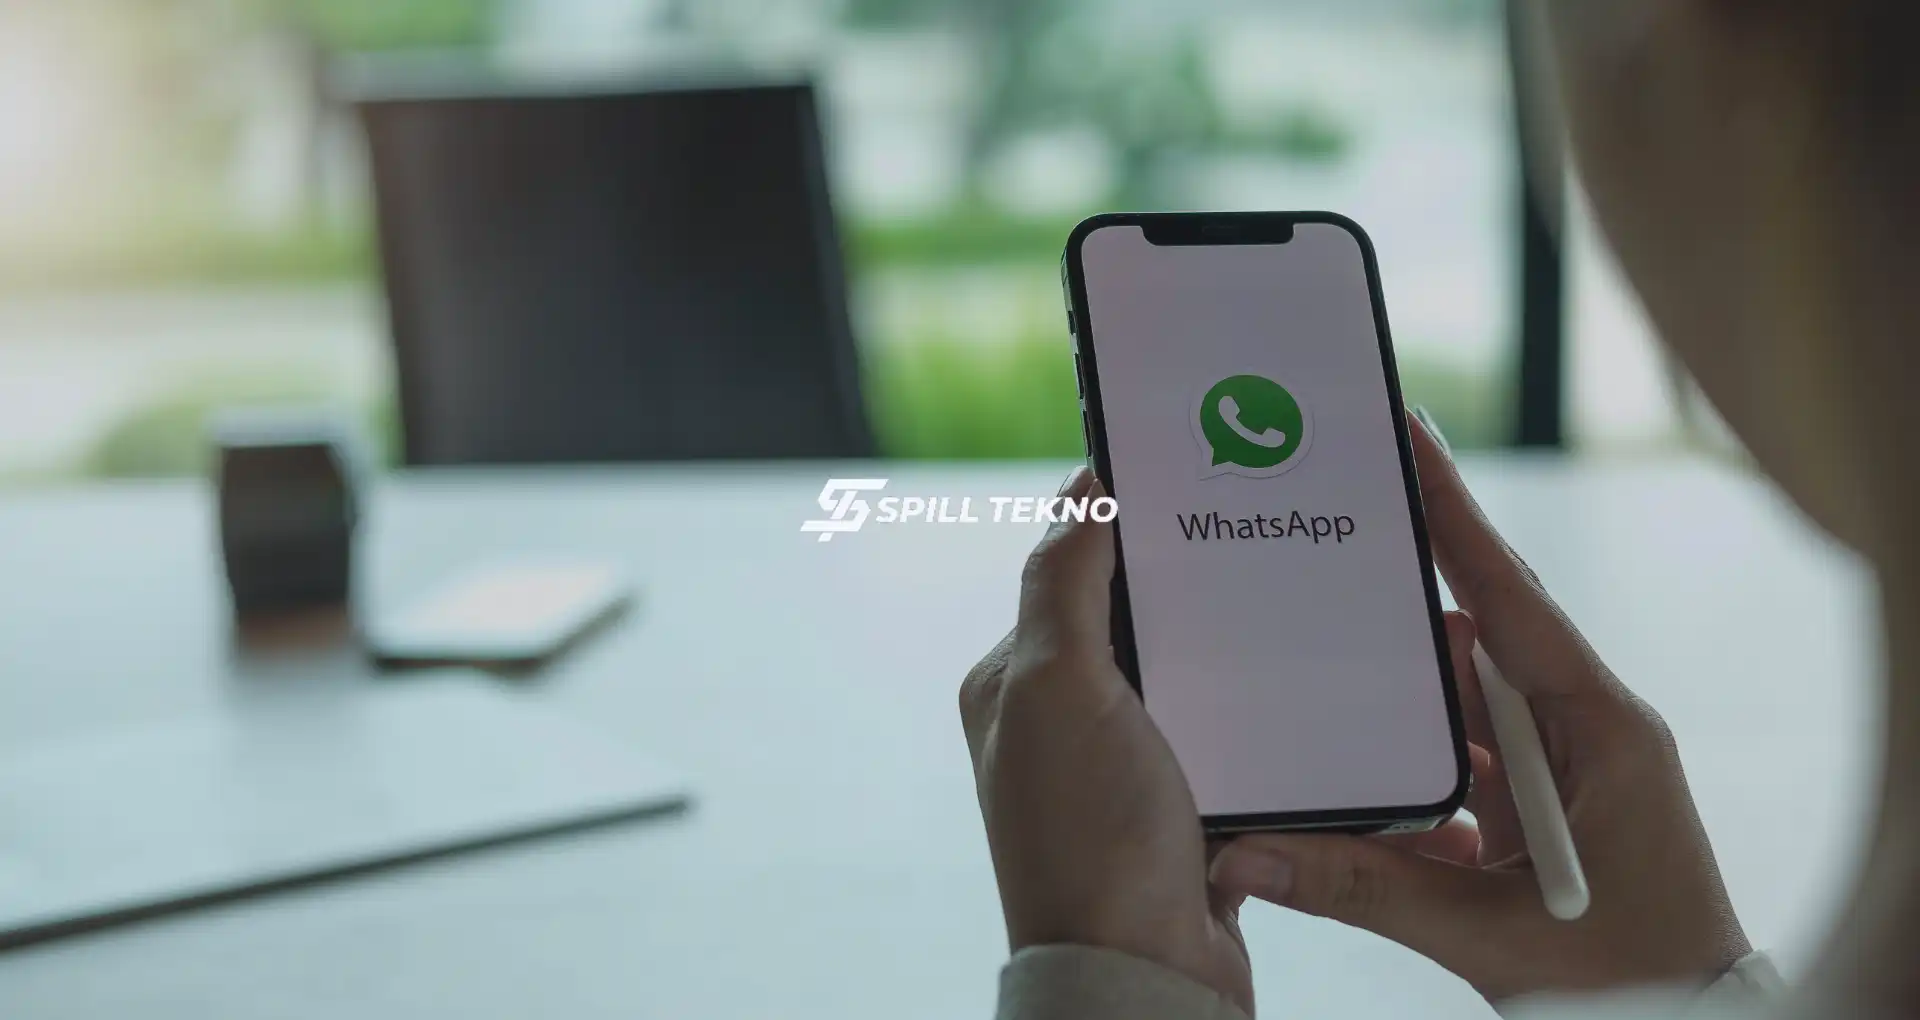 Cara Menghapus Akun WhatsApp di HP Orang Lain agar Tetap Aman